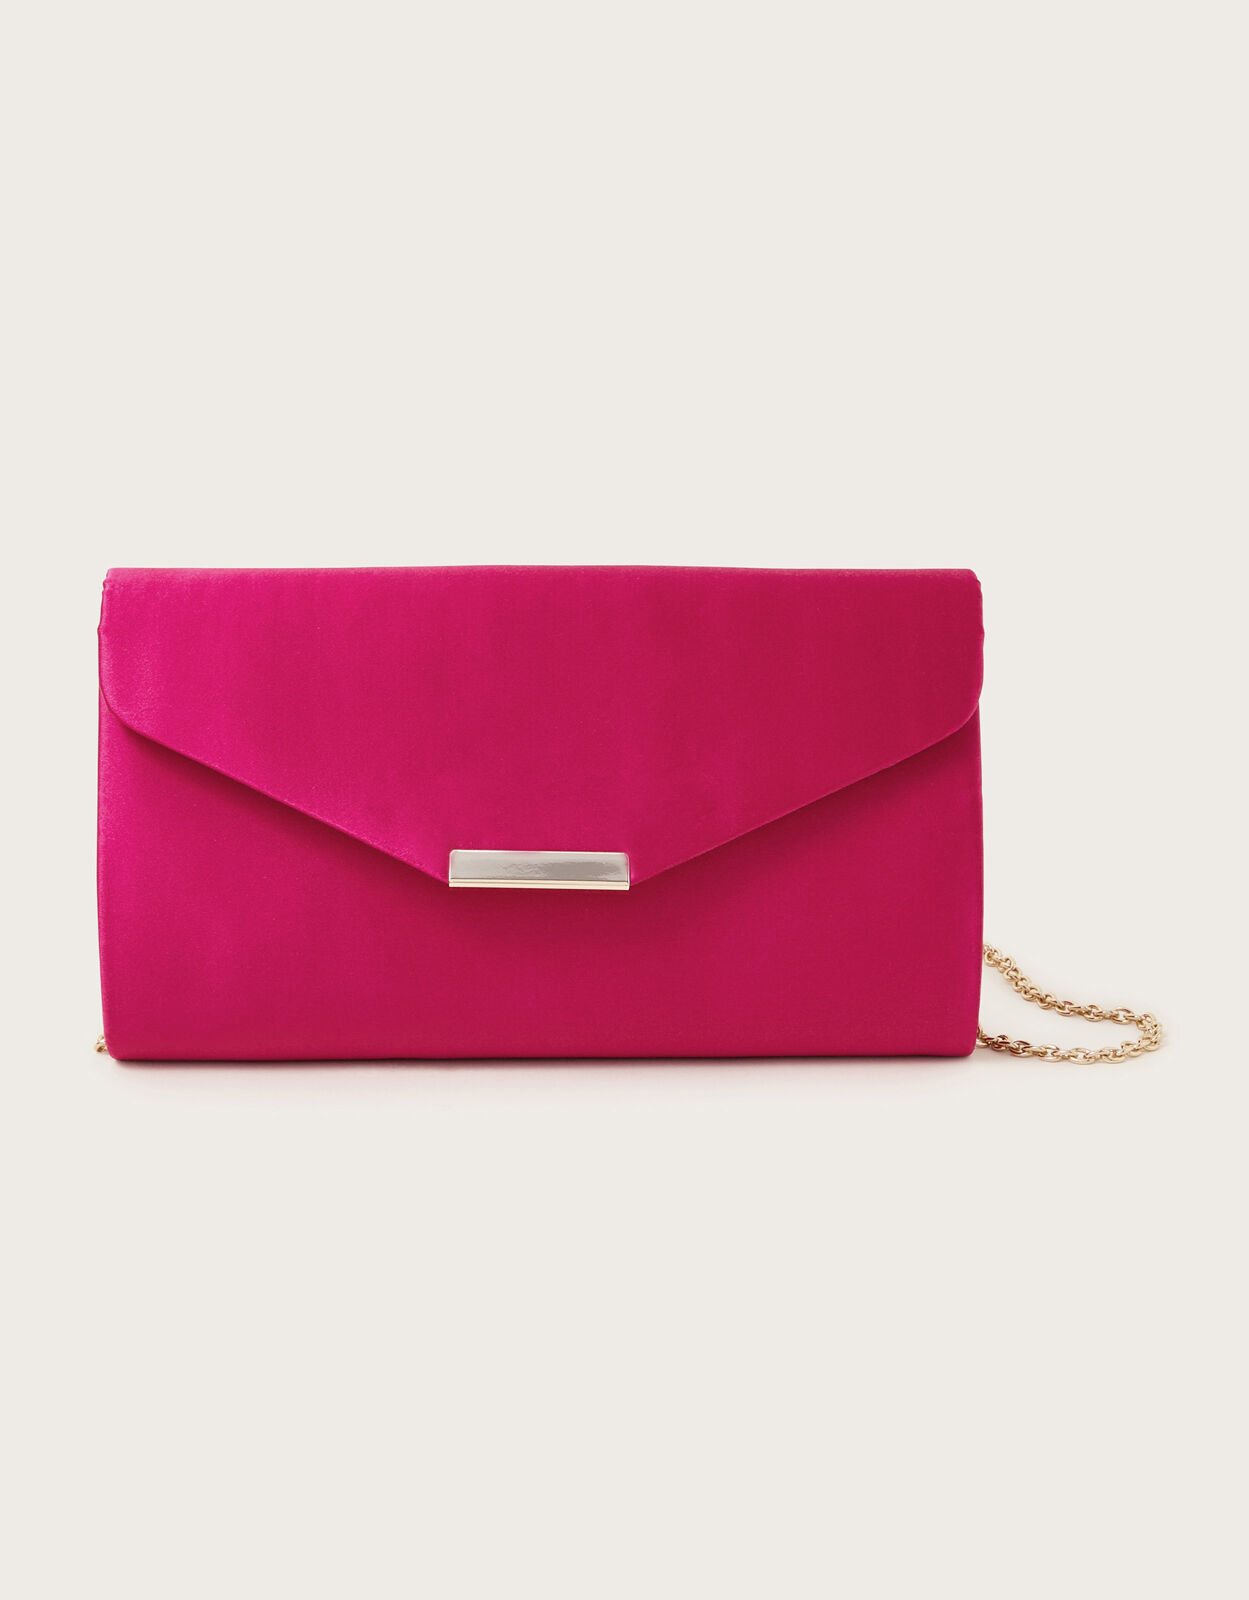 Super Mini Evening Bag Rhinestone Clutch Pink Satin Bridal Bag Evening Bag  Chic | eBay